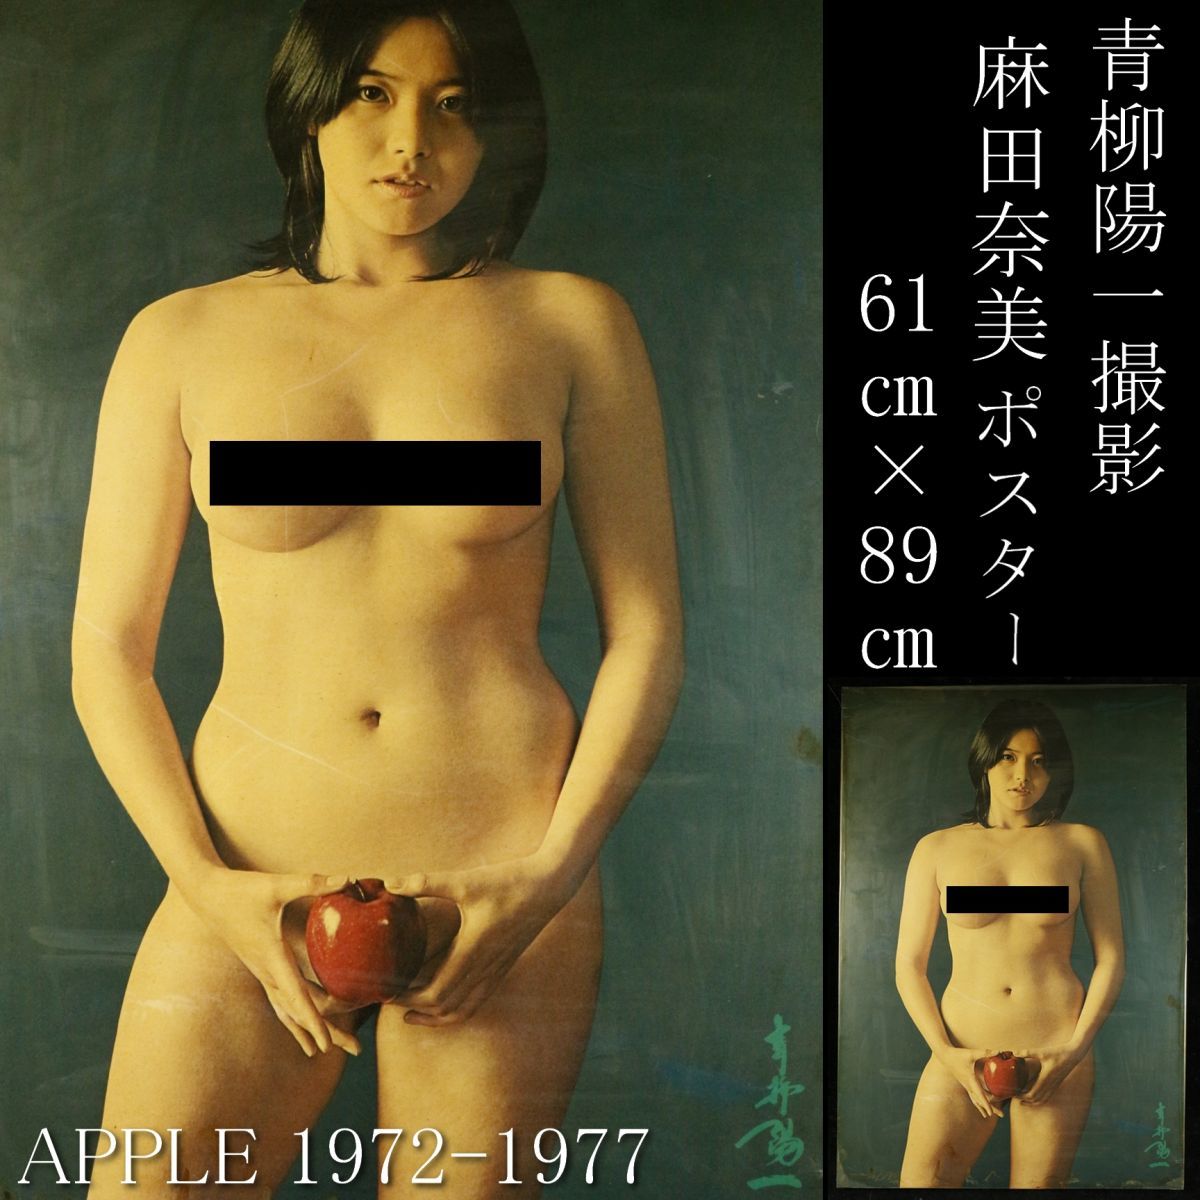 【LIG】麻田奈美 APPLE 1972-1977 ポスター 61㎝×88.5㎝ 写真家・青柳陽一 撮影 コレクター収蔵品 [.QP]23.11_画像1